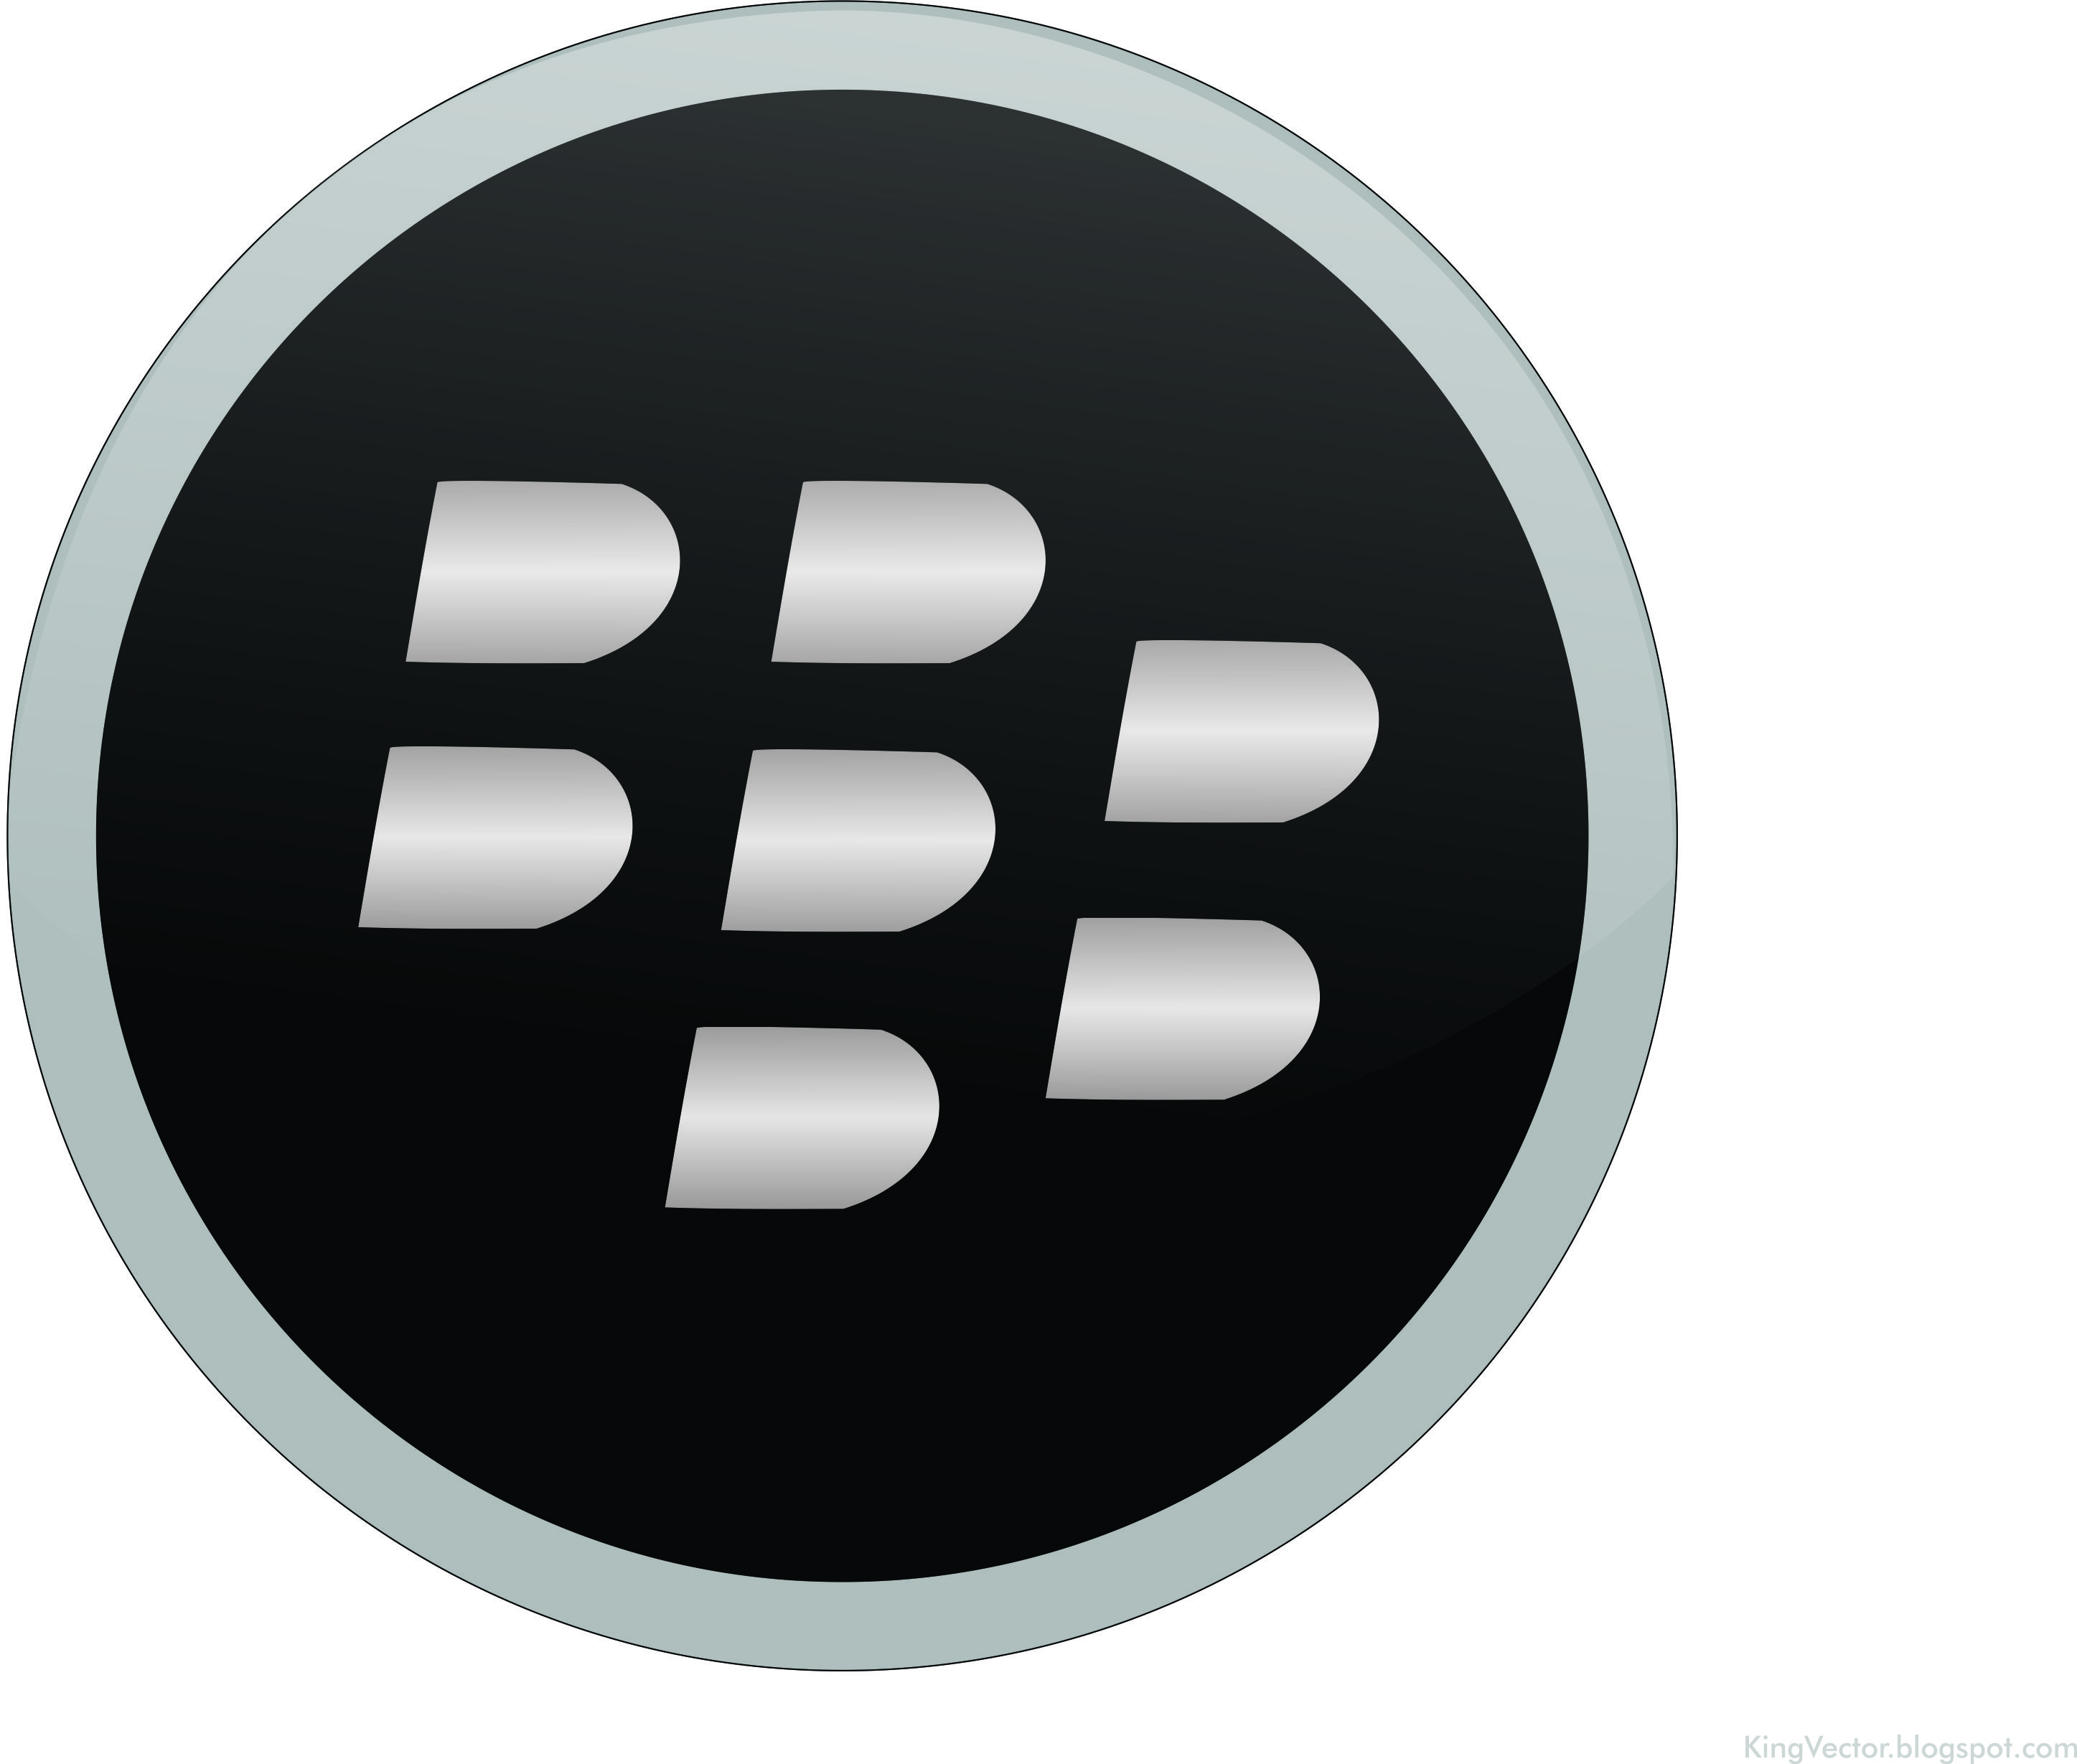 Blackberry Logo - Blackberry Vector, Transparent background PNG HD thumbnail